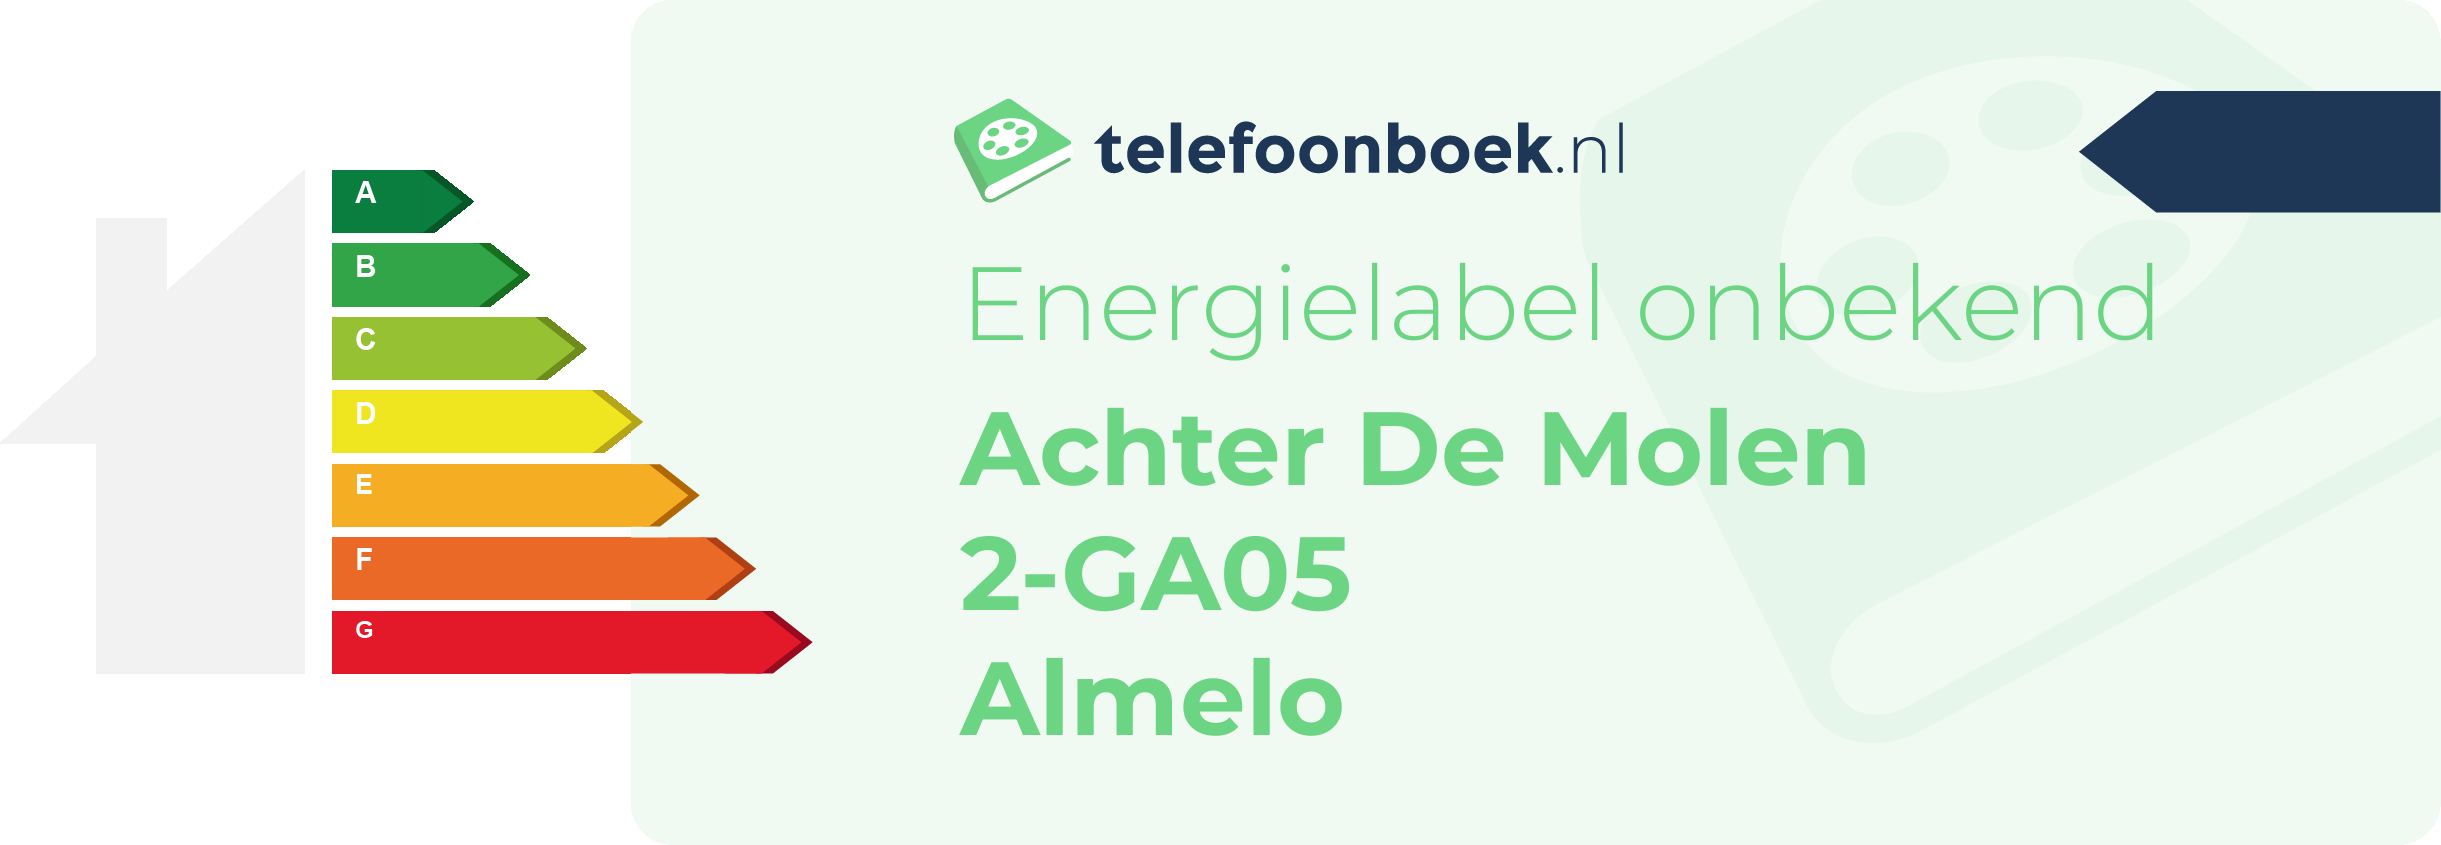 Energielabel Achter De Molen 2-GA05 Almelo